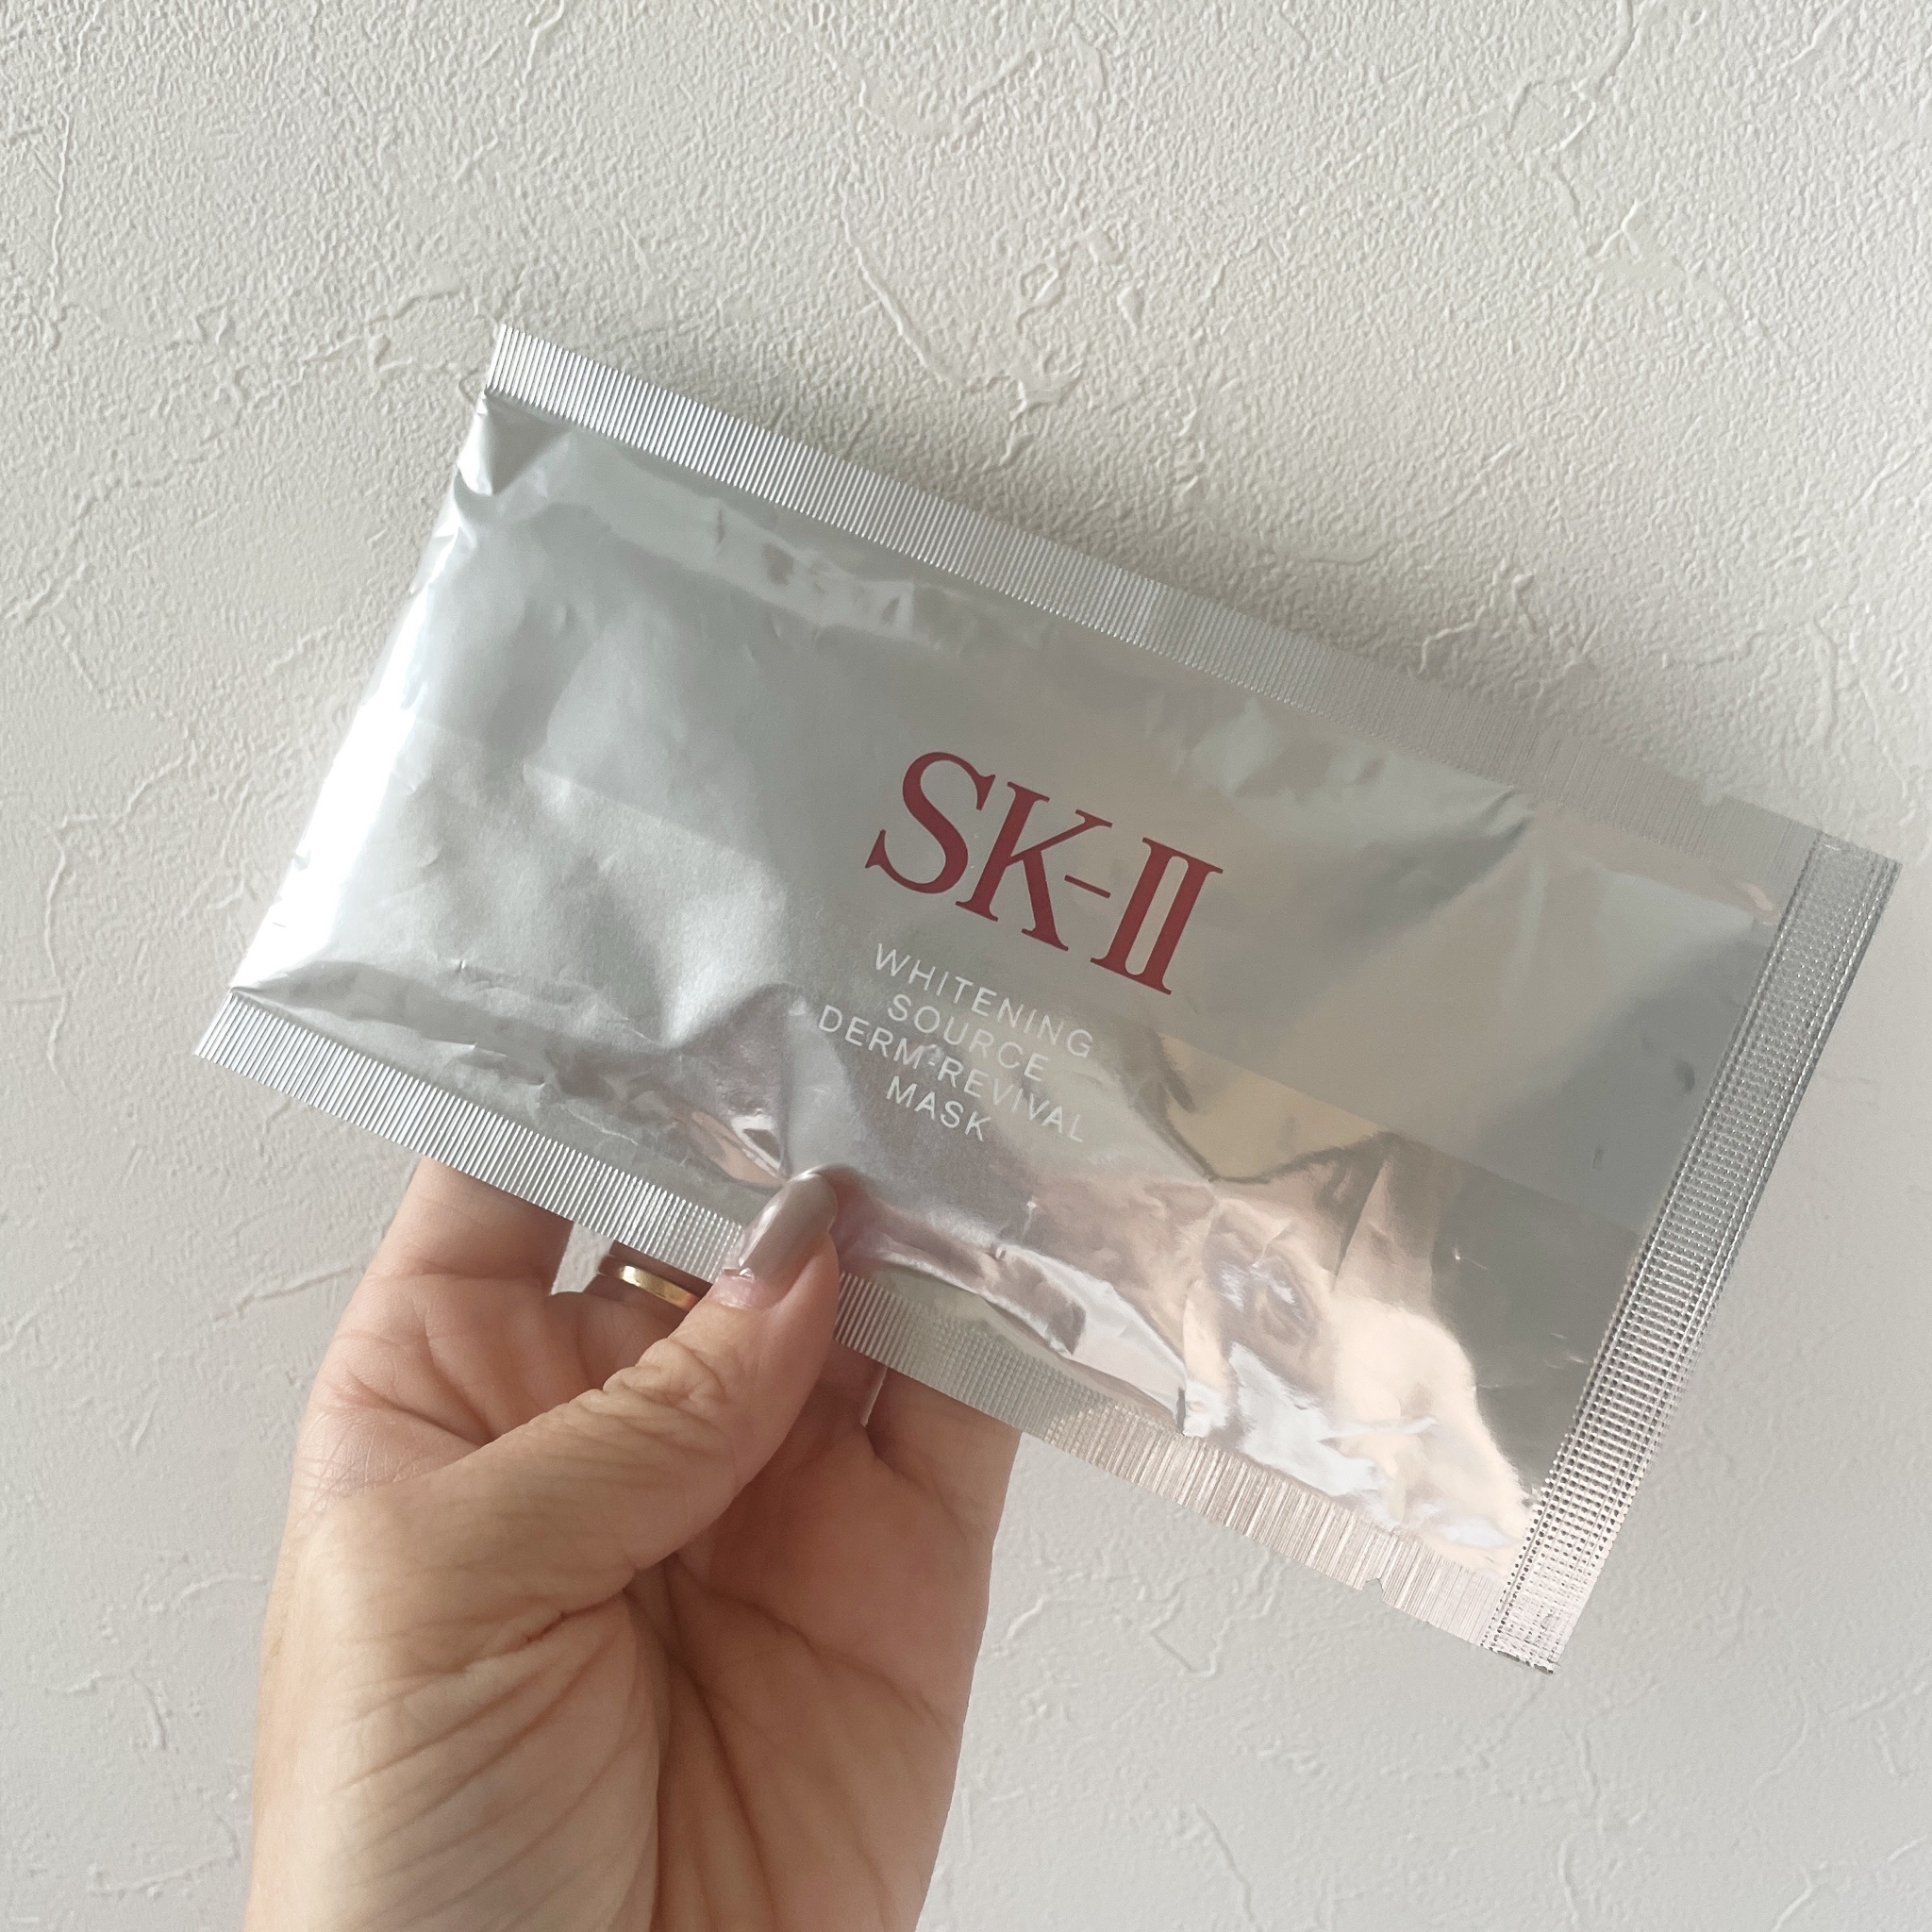 SK-II / ホワイトニング ソース ダーム・リバイバル マスクの口コミ